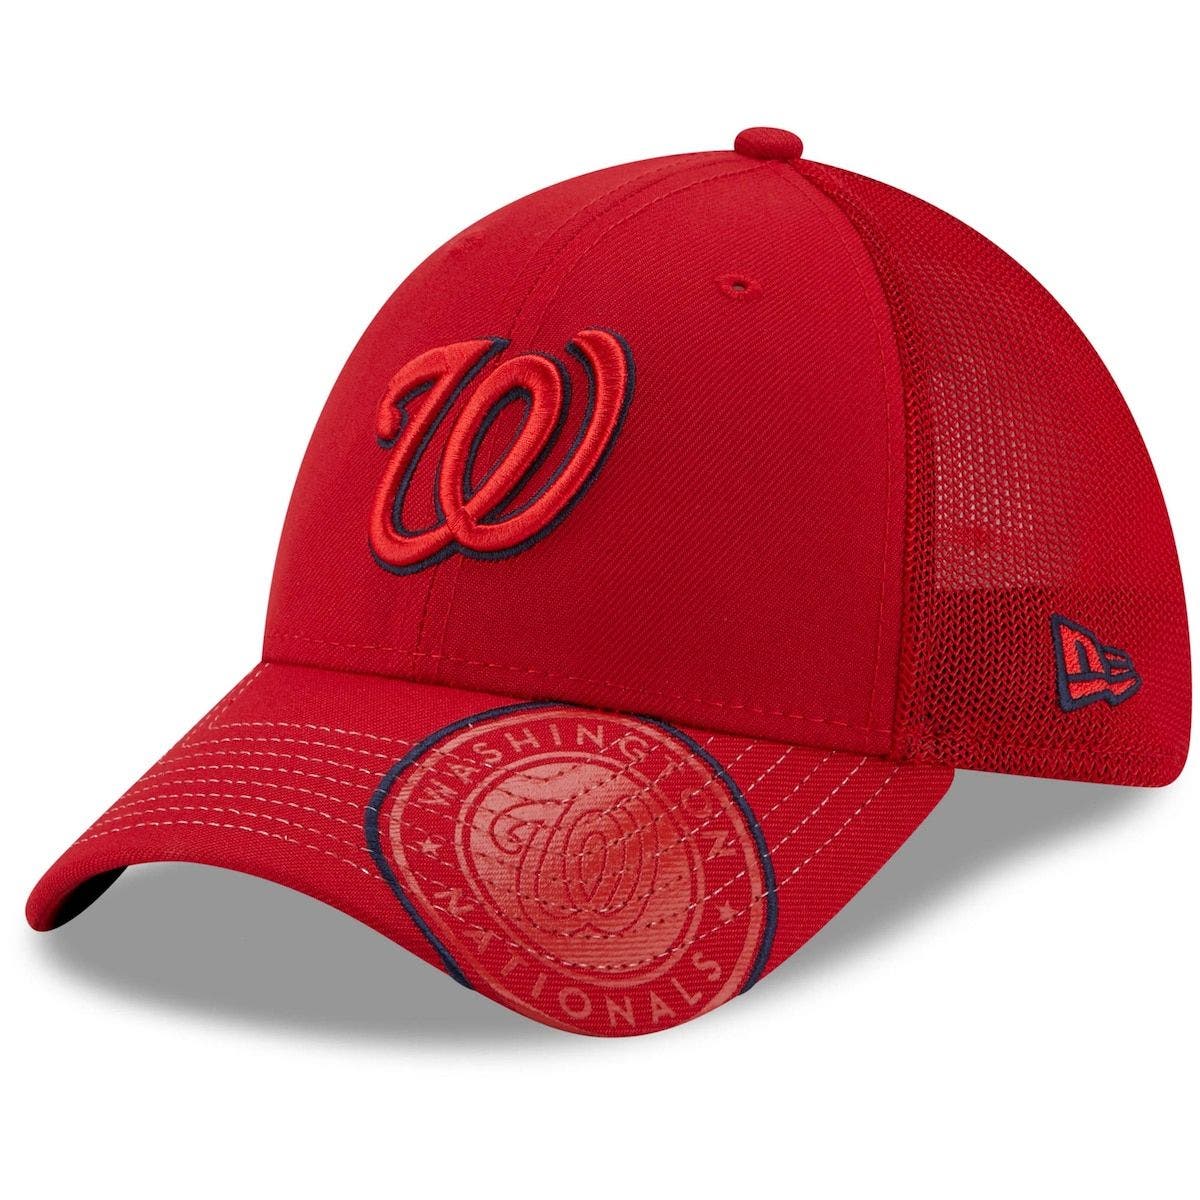 ARD CHAMPS™ New Fashion Adjustable Snapback Hip-hop Baseball Cap Hat Unisex 